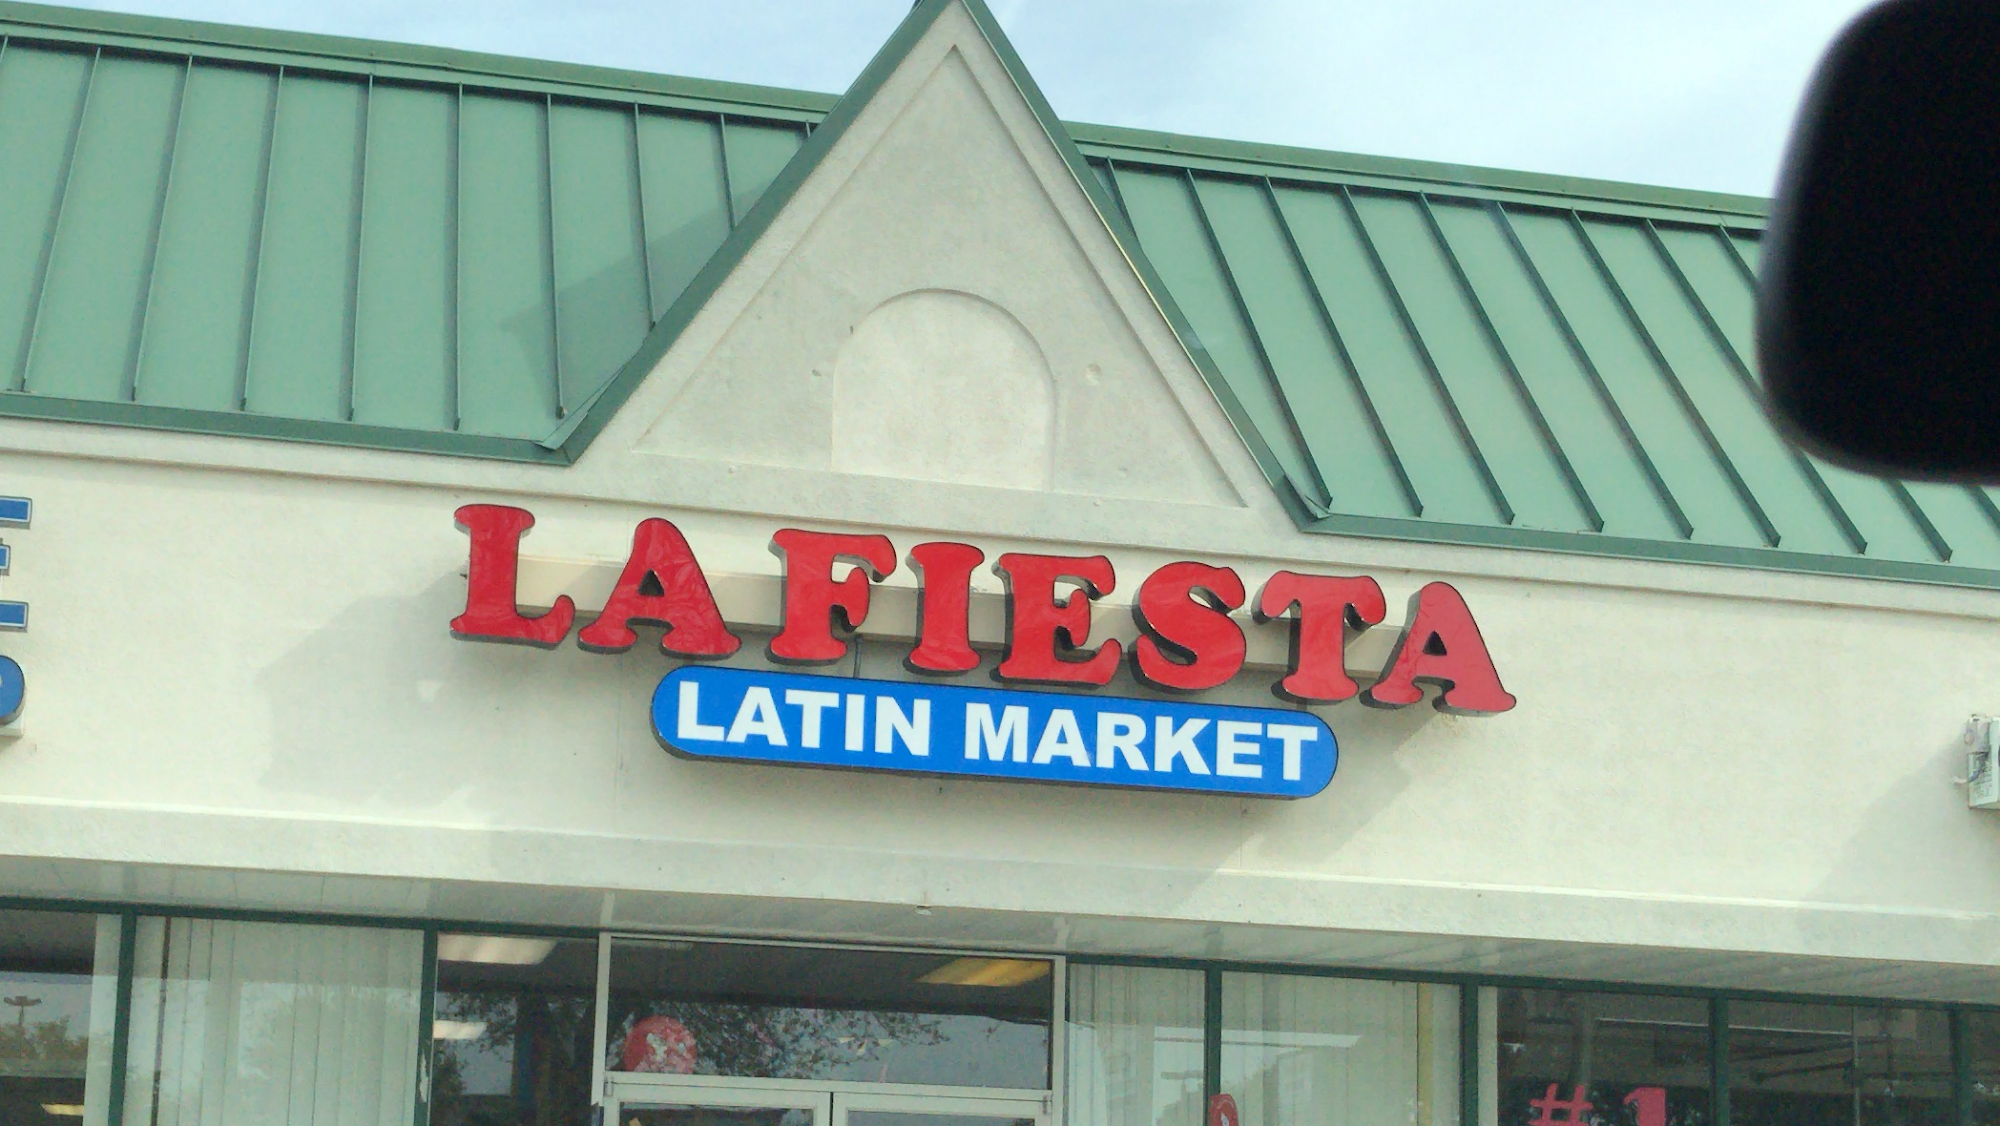 La Fiesta Latin Market